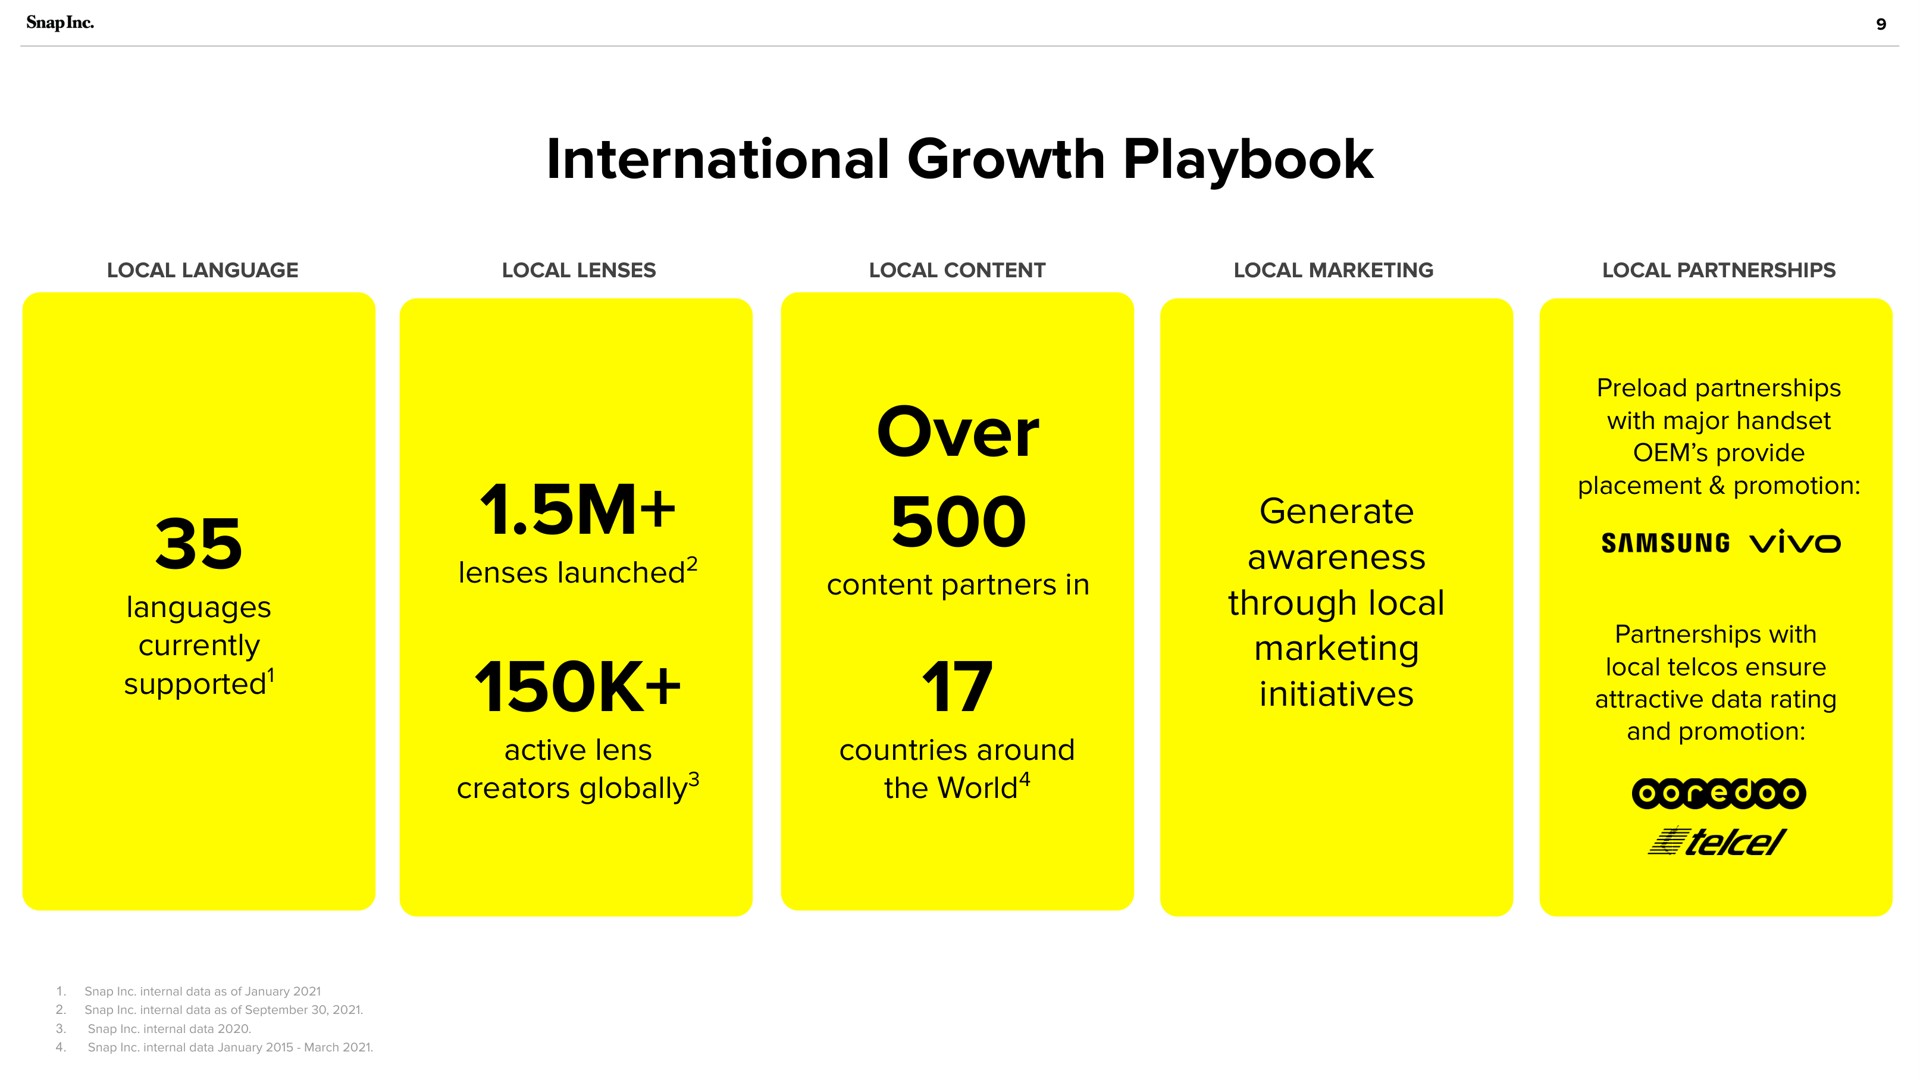 international growth playbook over | Snap Inc